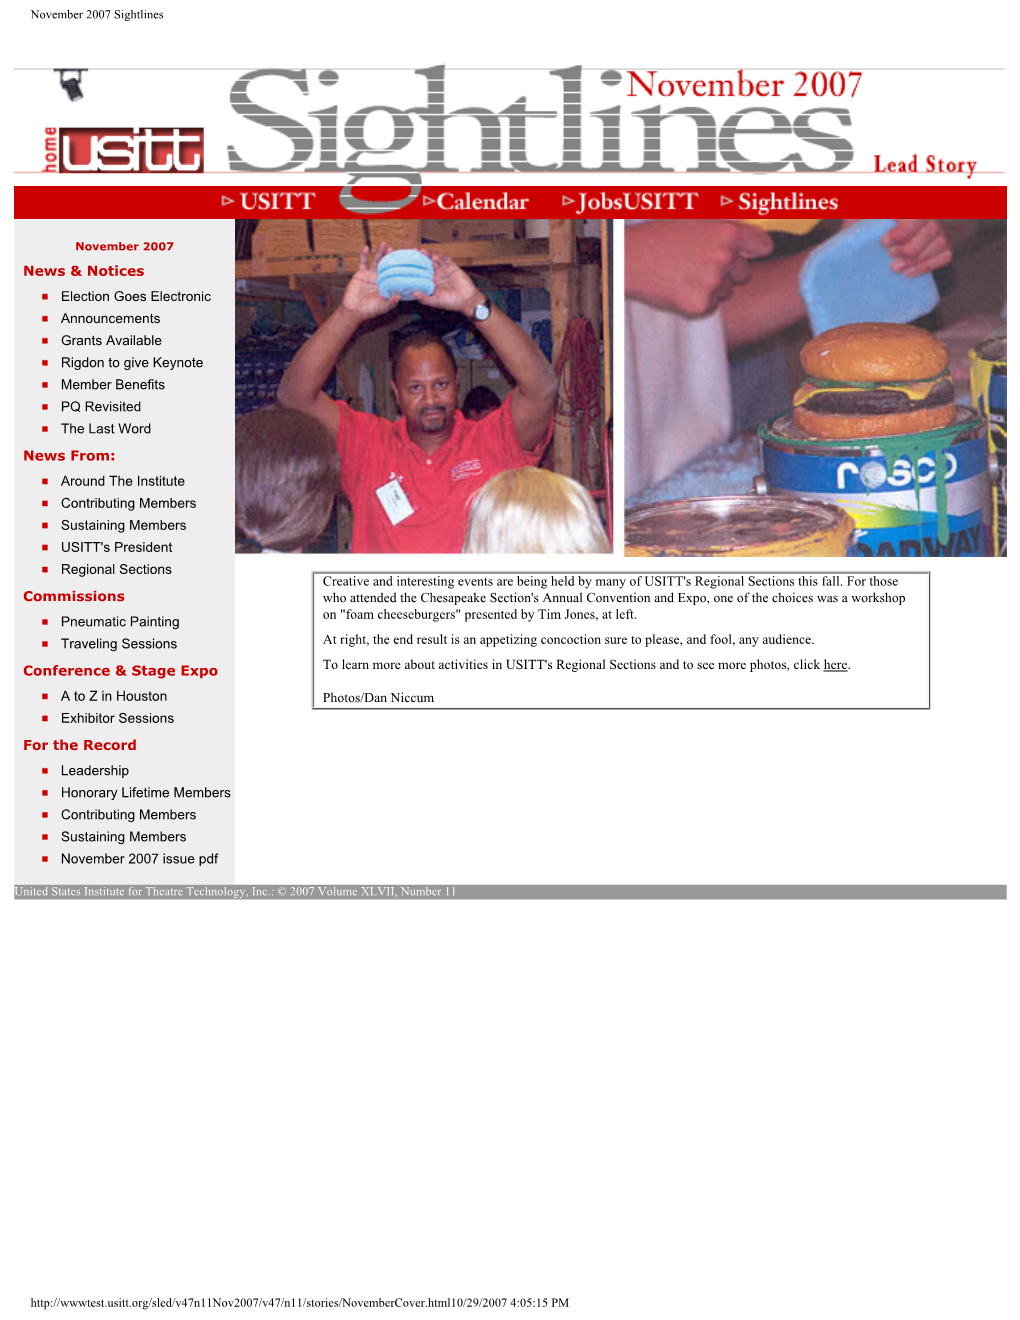 November 2007 Issue Pdf